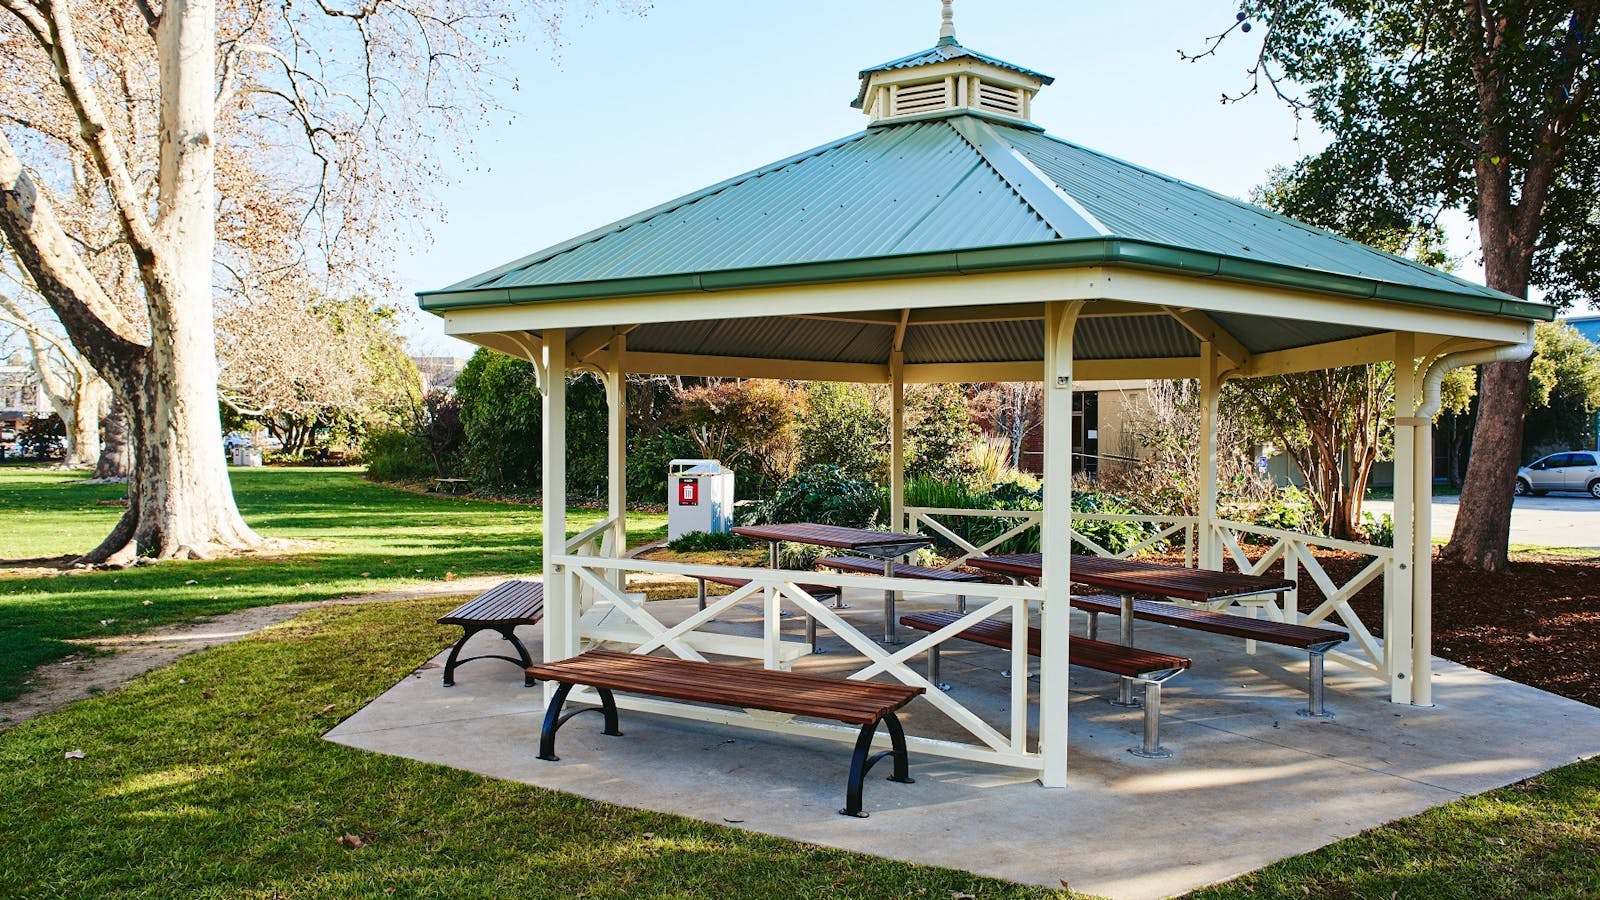 Rotunda, seats, picnic tables, grass, sunshine, trees, bushes